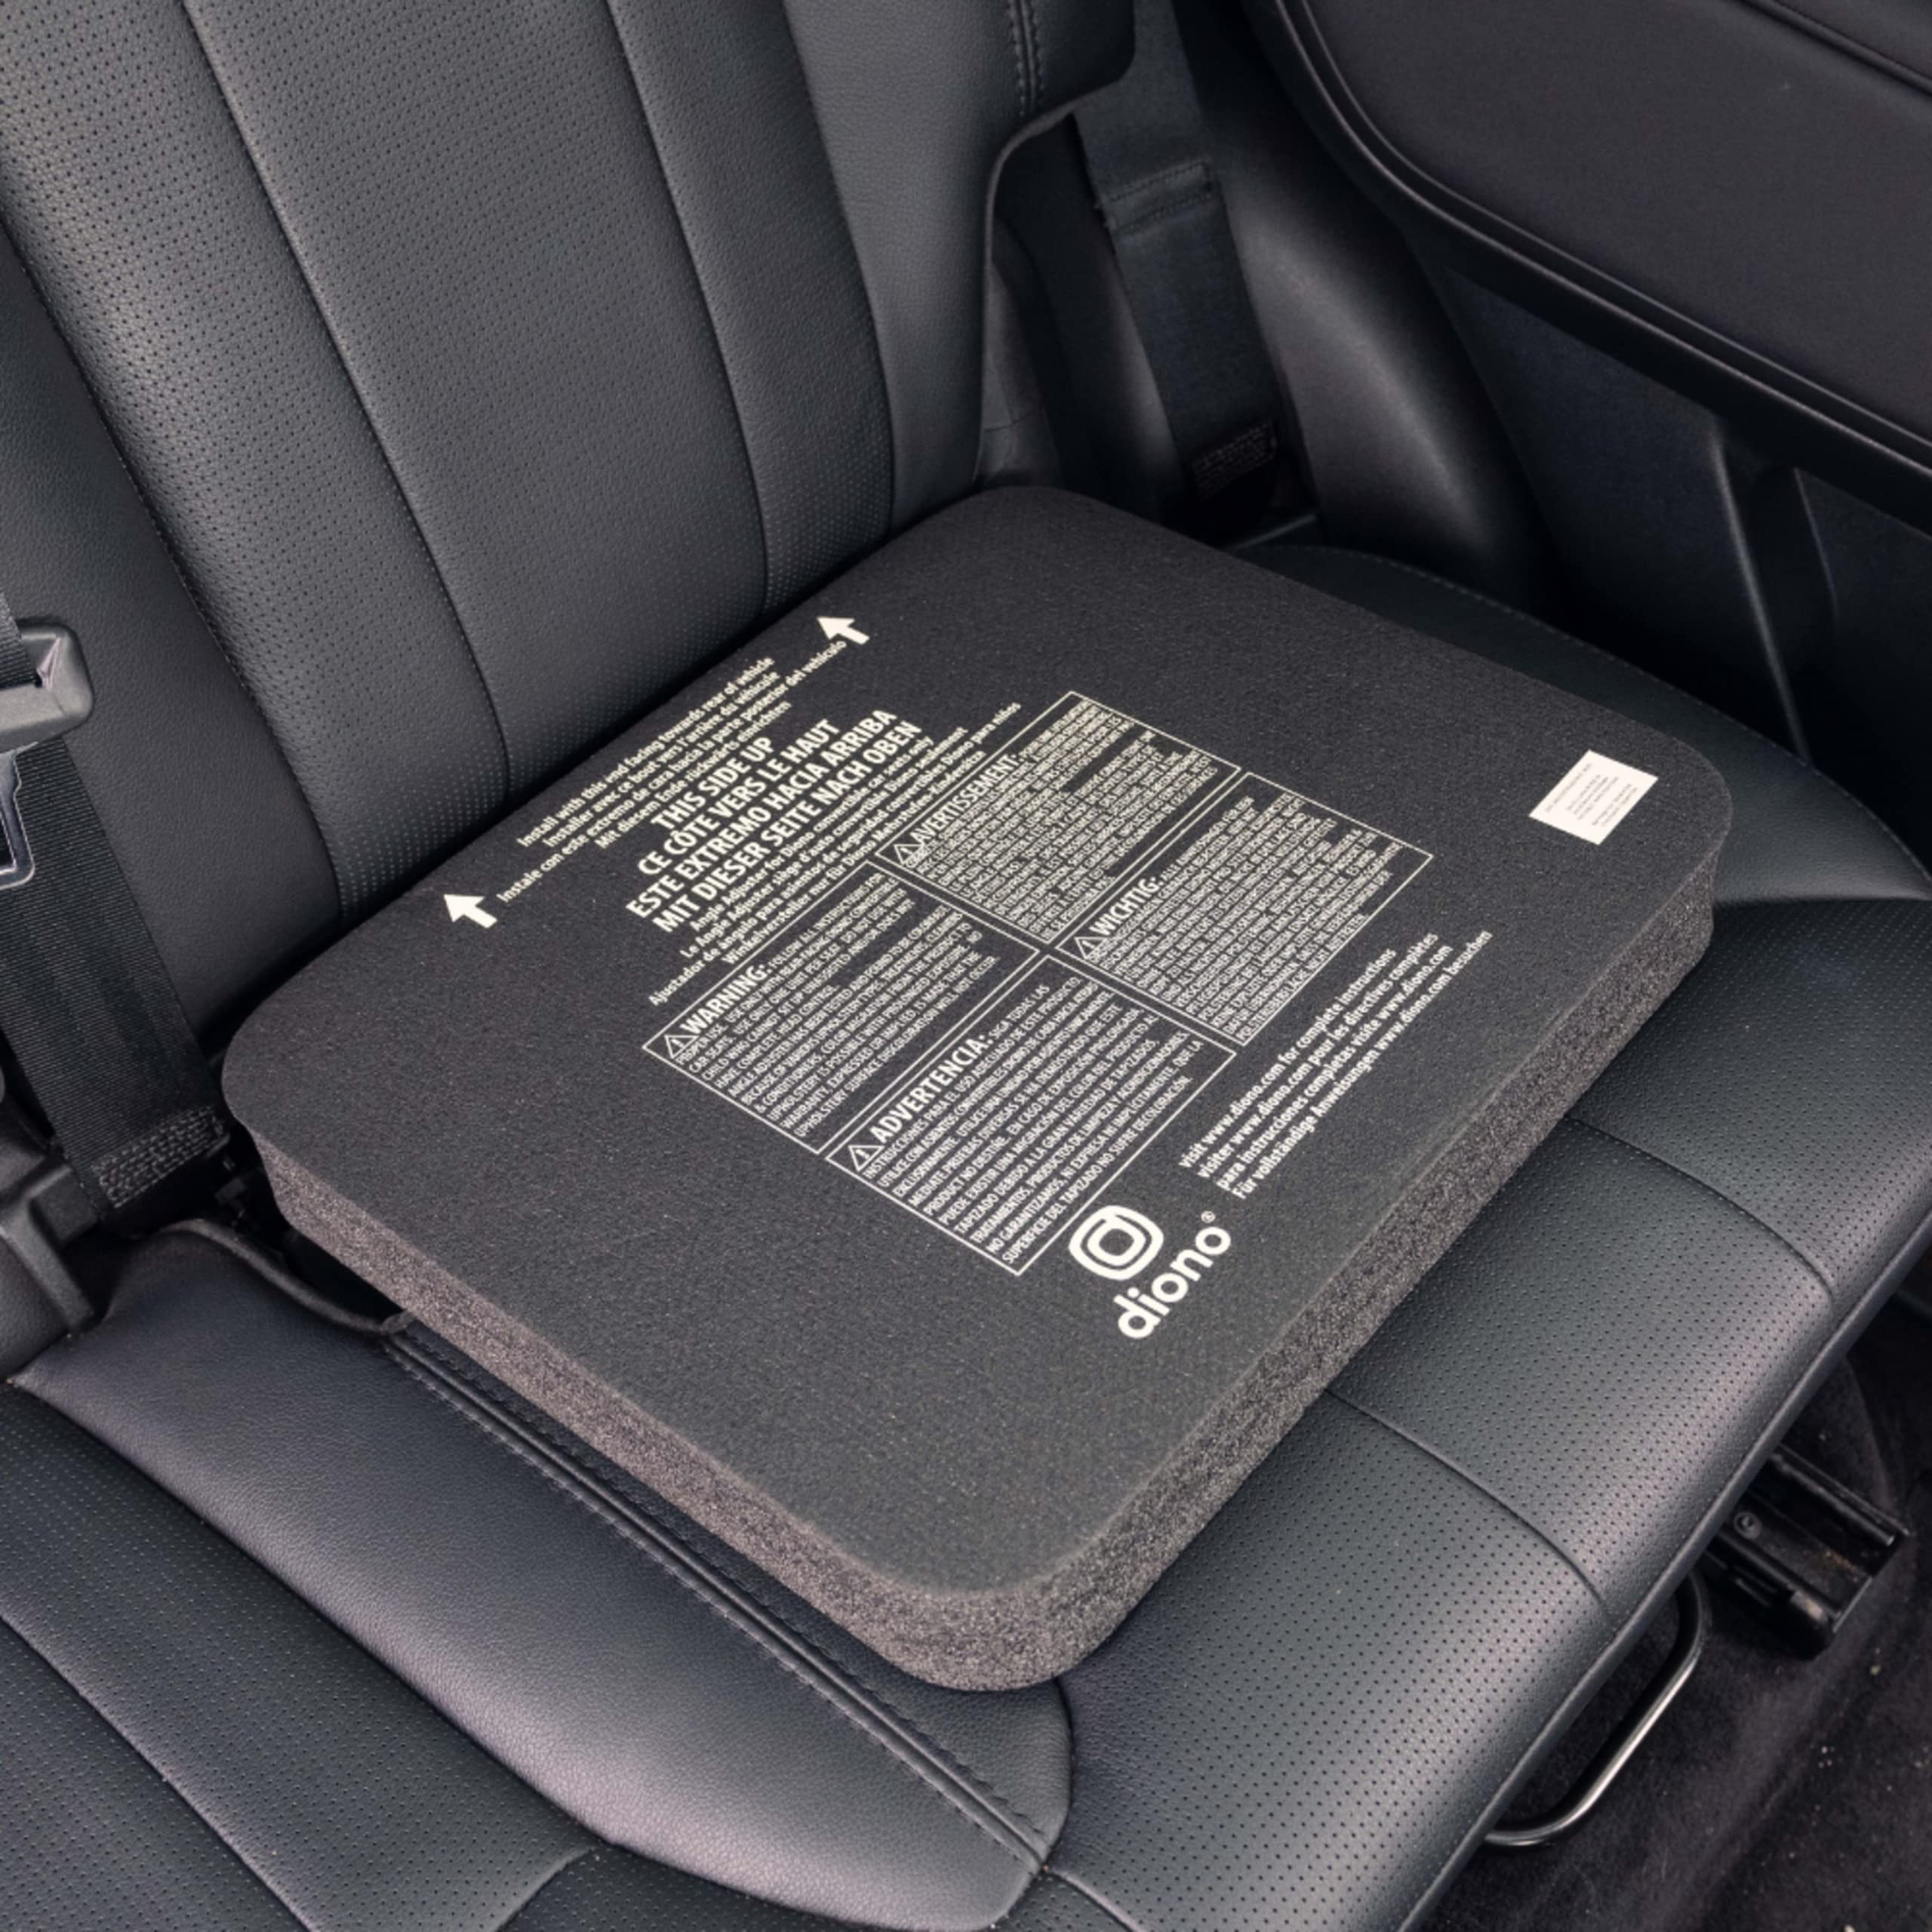 Diono Angle Adjuster Car Seat Leveler, Car Seat Wedge Cushion, Foam Provides More Legroom for Rear-Facing Car Seats